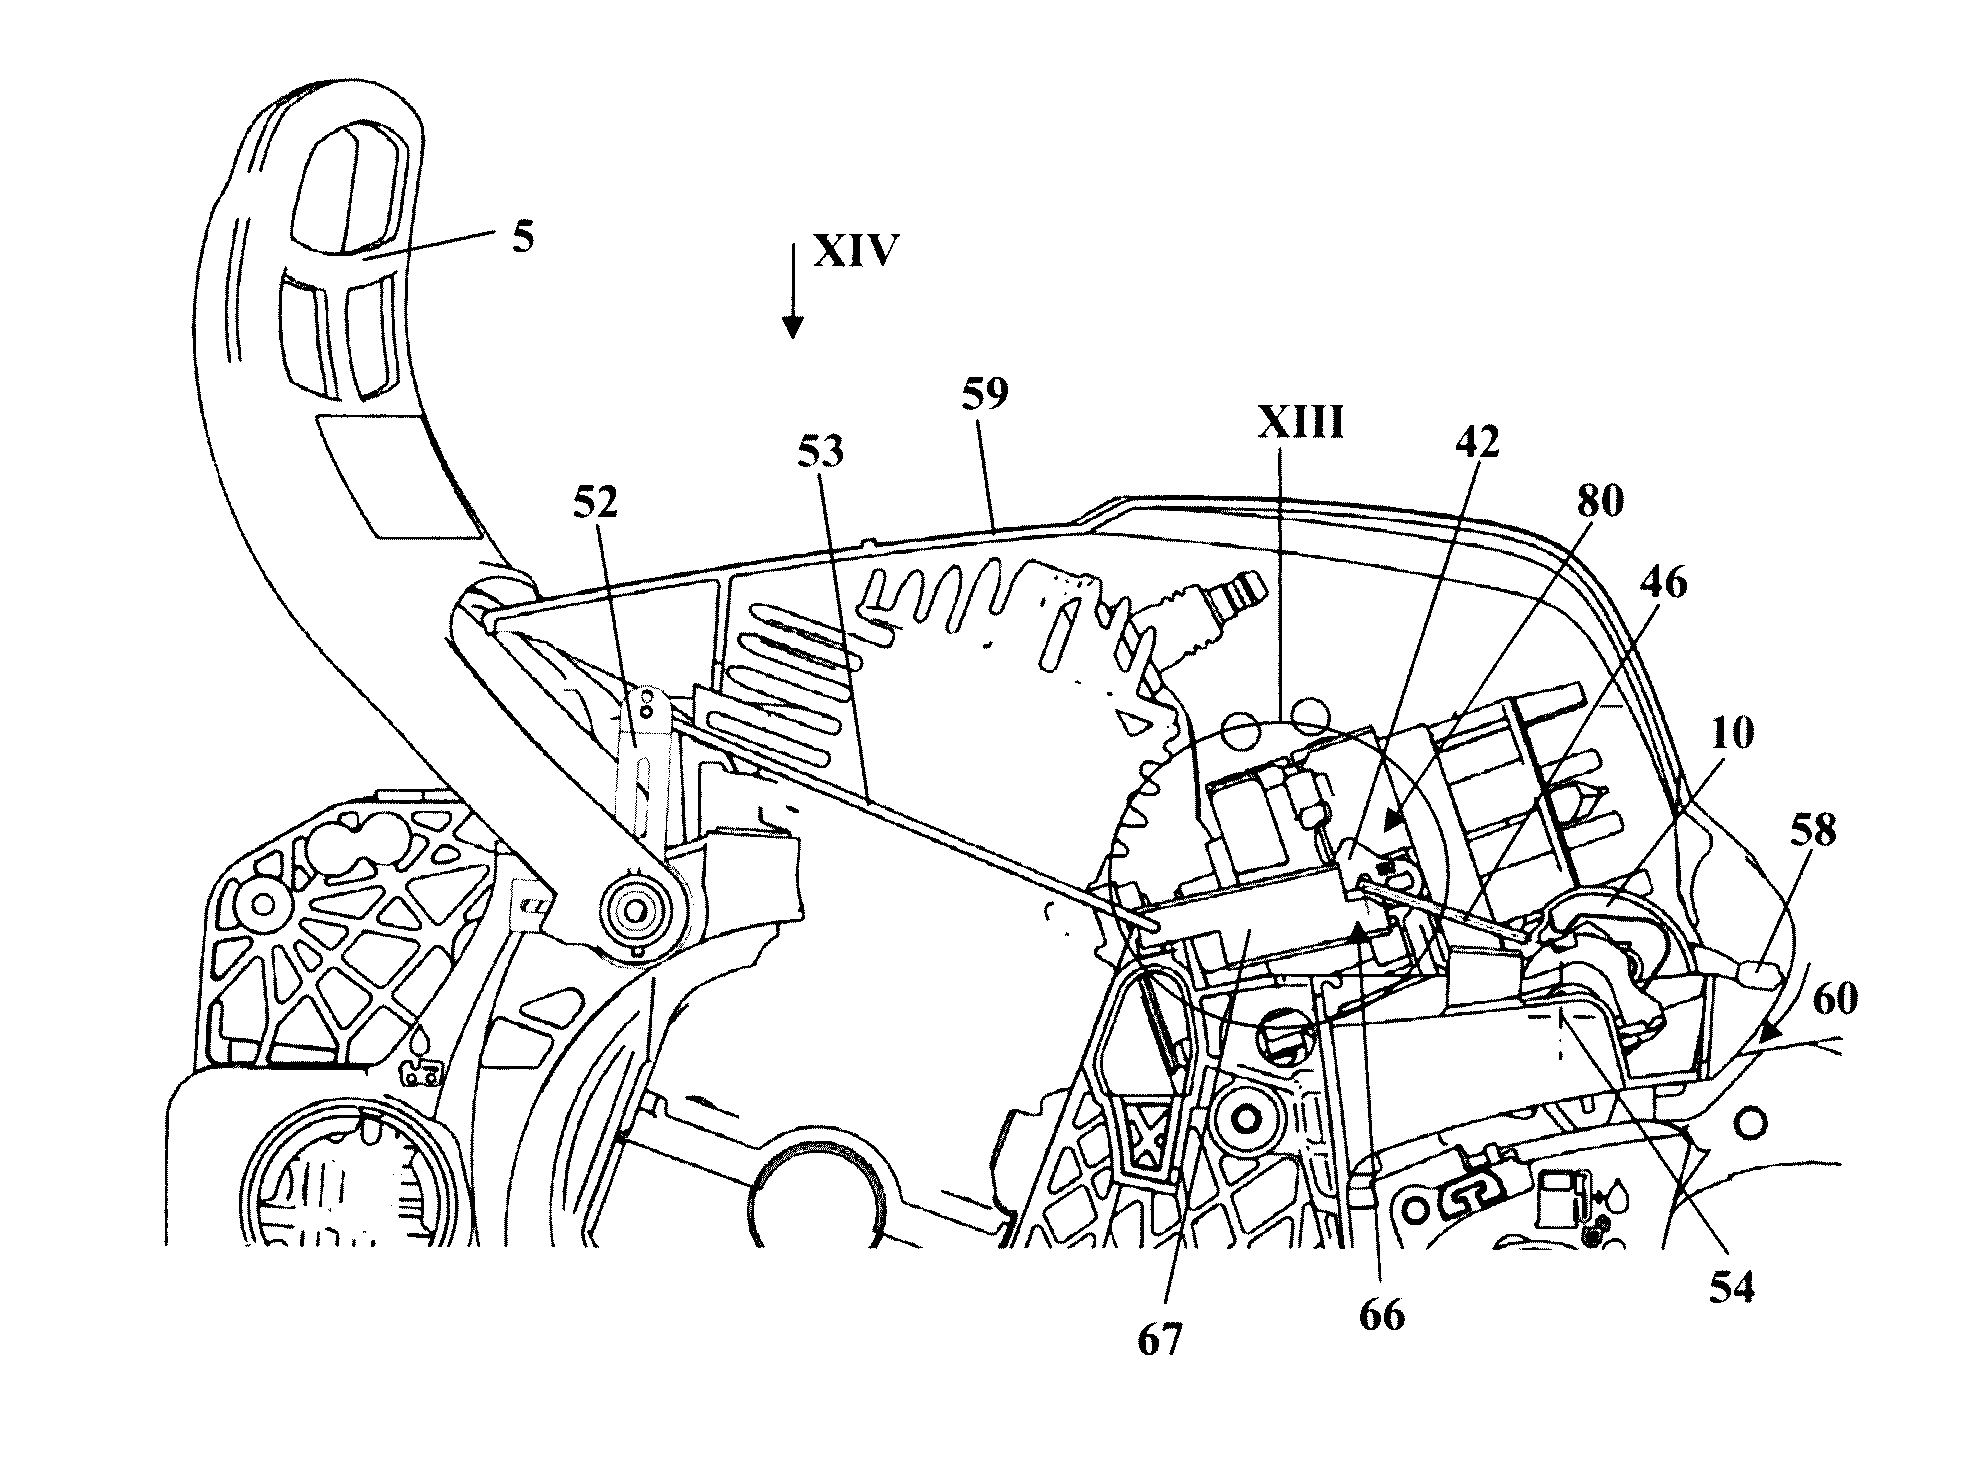 Work apparatus having a braking arrangement